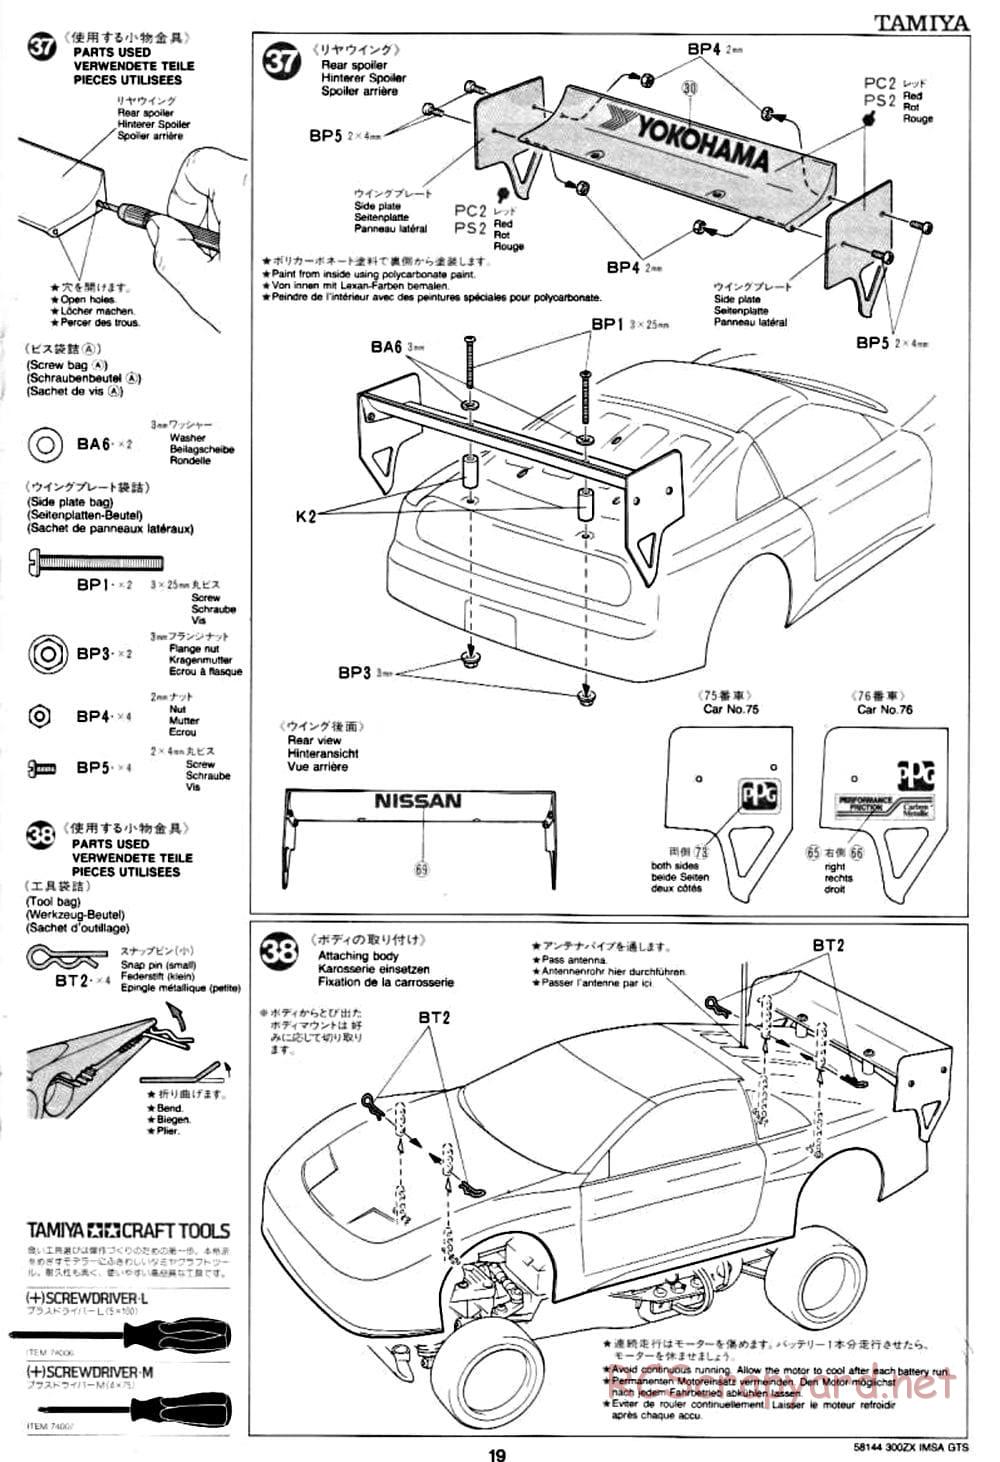 Tamiya - Nissan 300ZX IMSA-GTS - TA-02W Chassis - Manual - Page 19